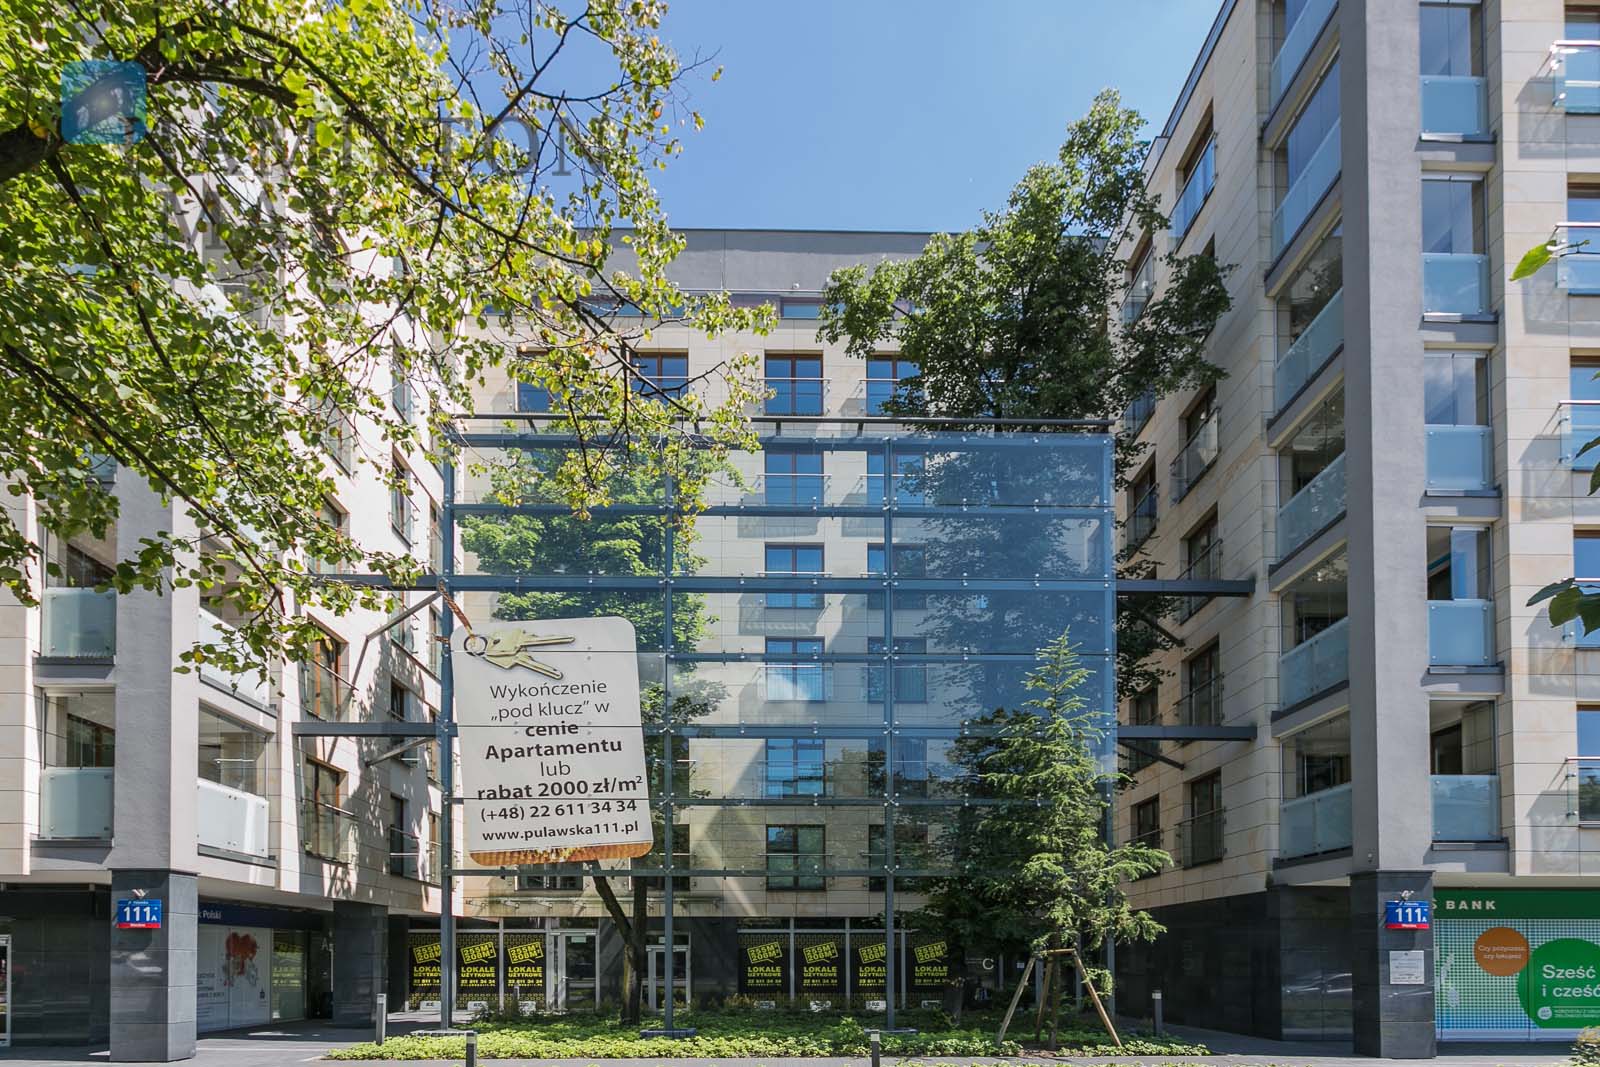 Luxurious apartments located nearby Królikarnia park complex